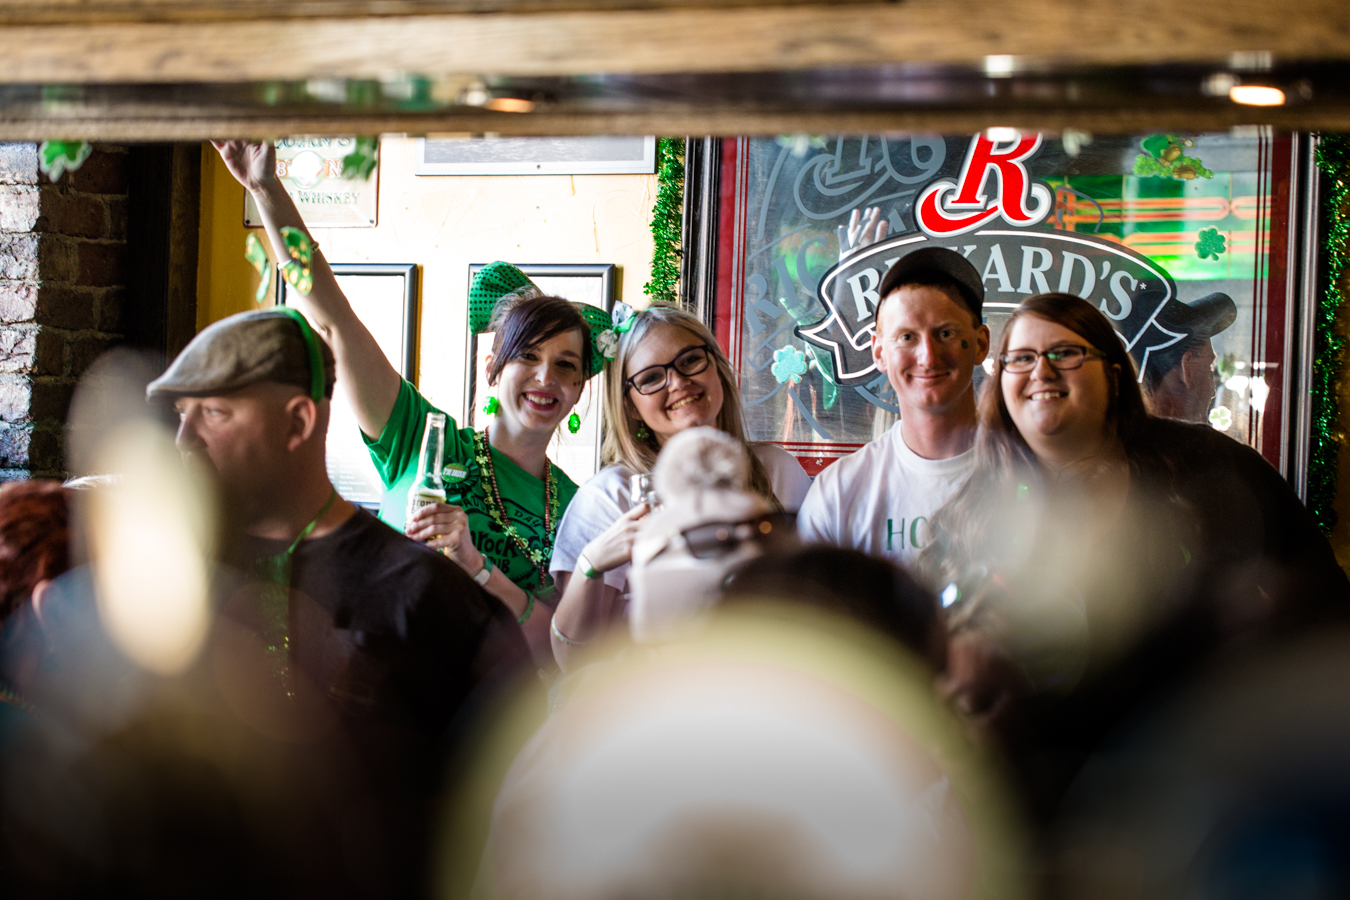 VIcky and her crew - the Shambassadors - St. Patricks Day 2019 - Shamrock City Pub - water street